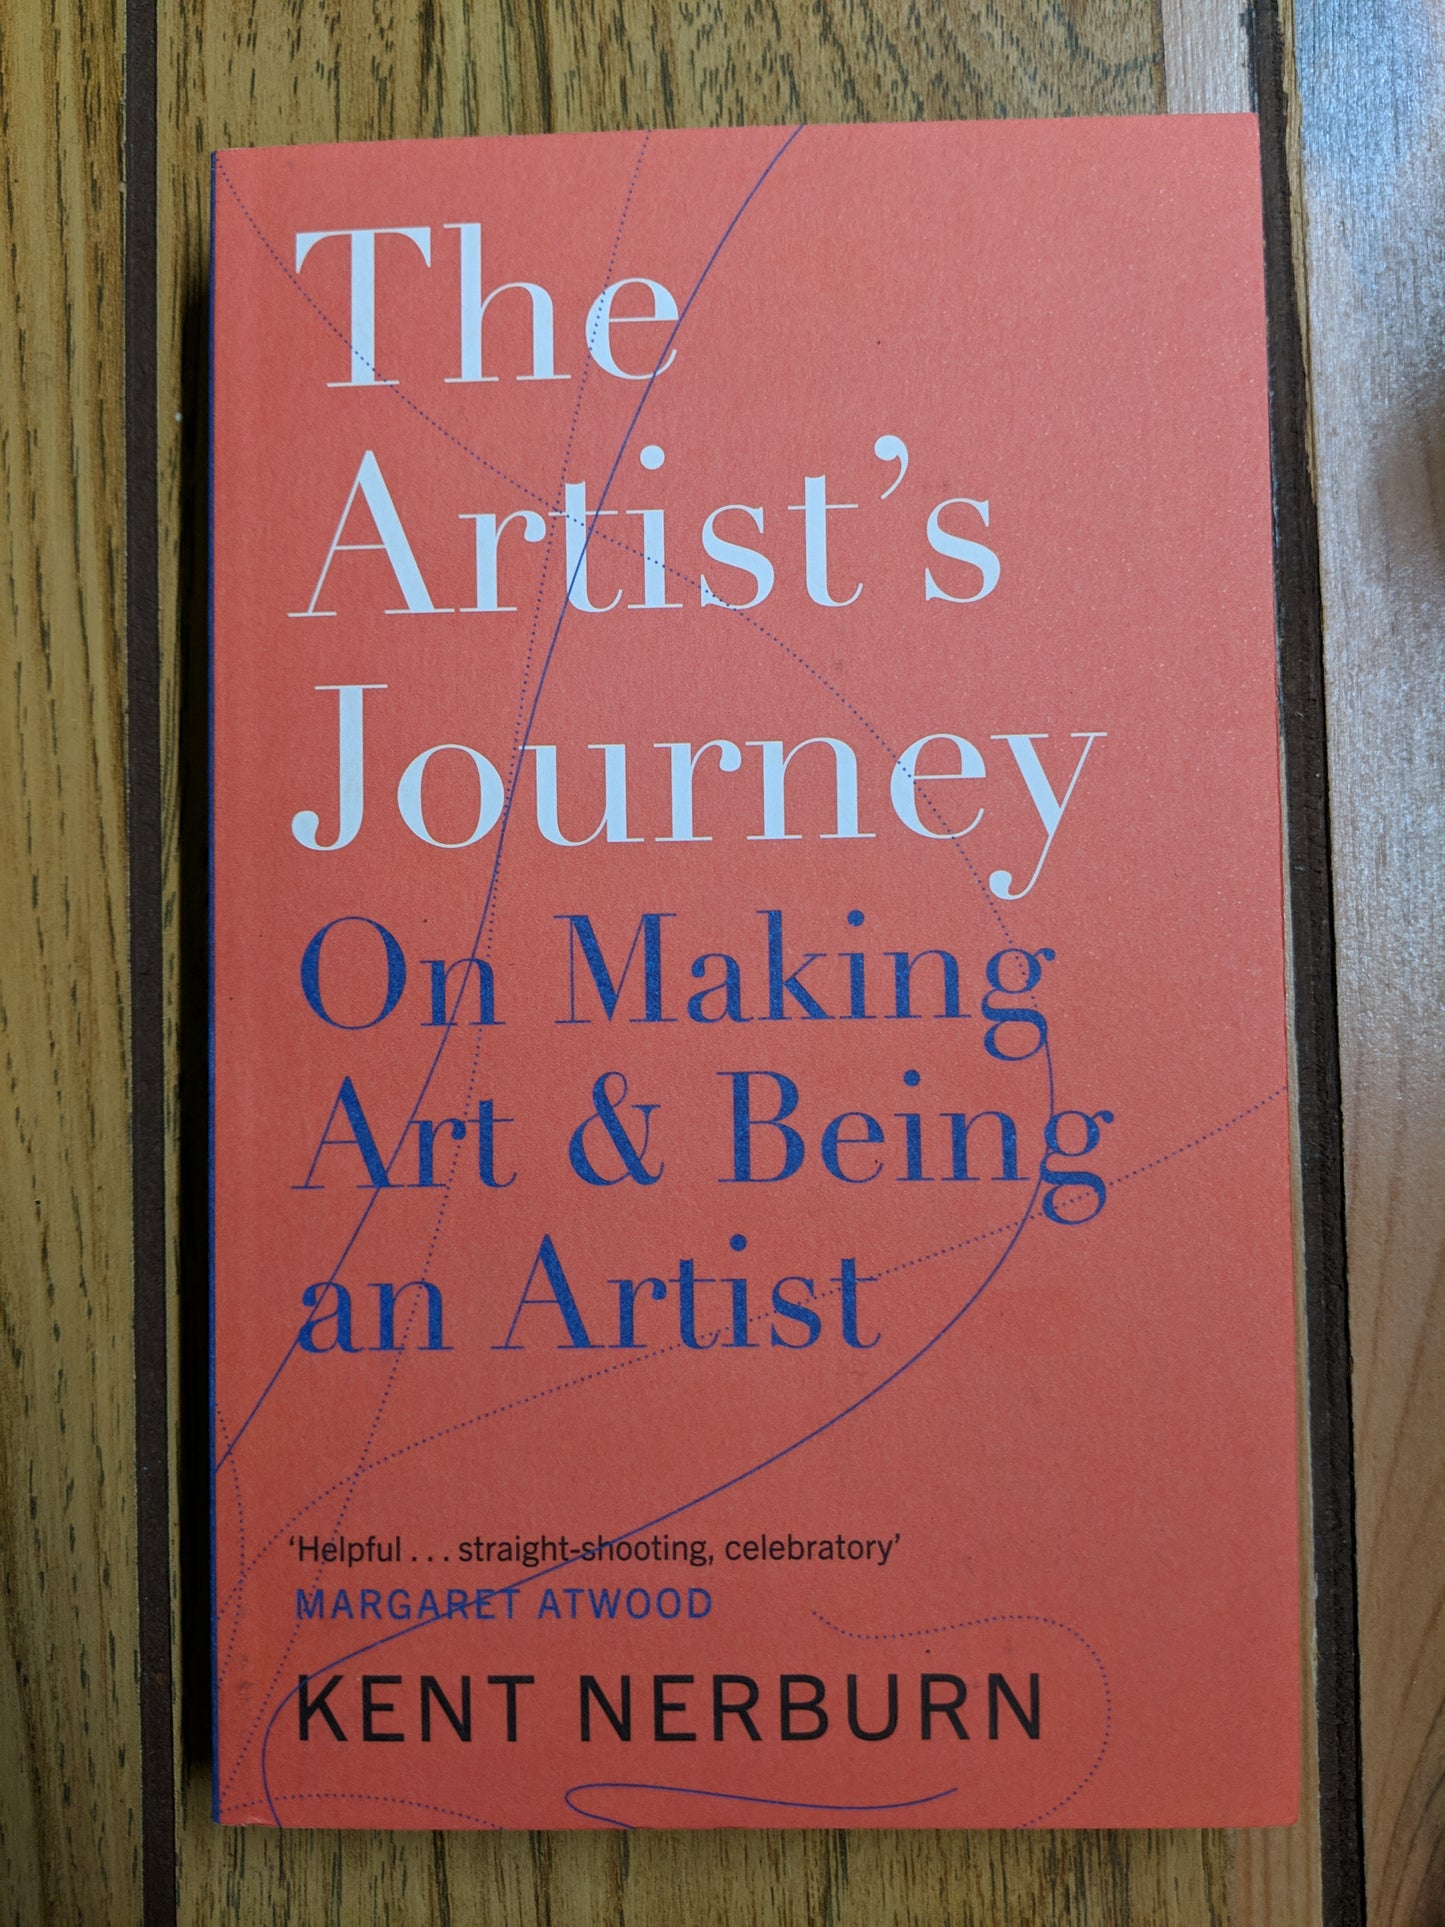 The Artist's Journey: On Making Art & Being an Artist